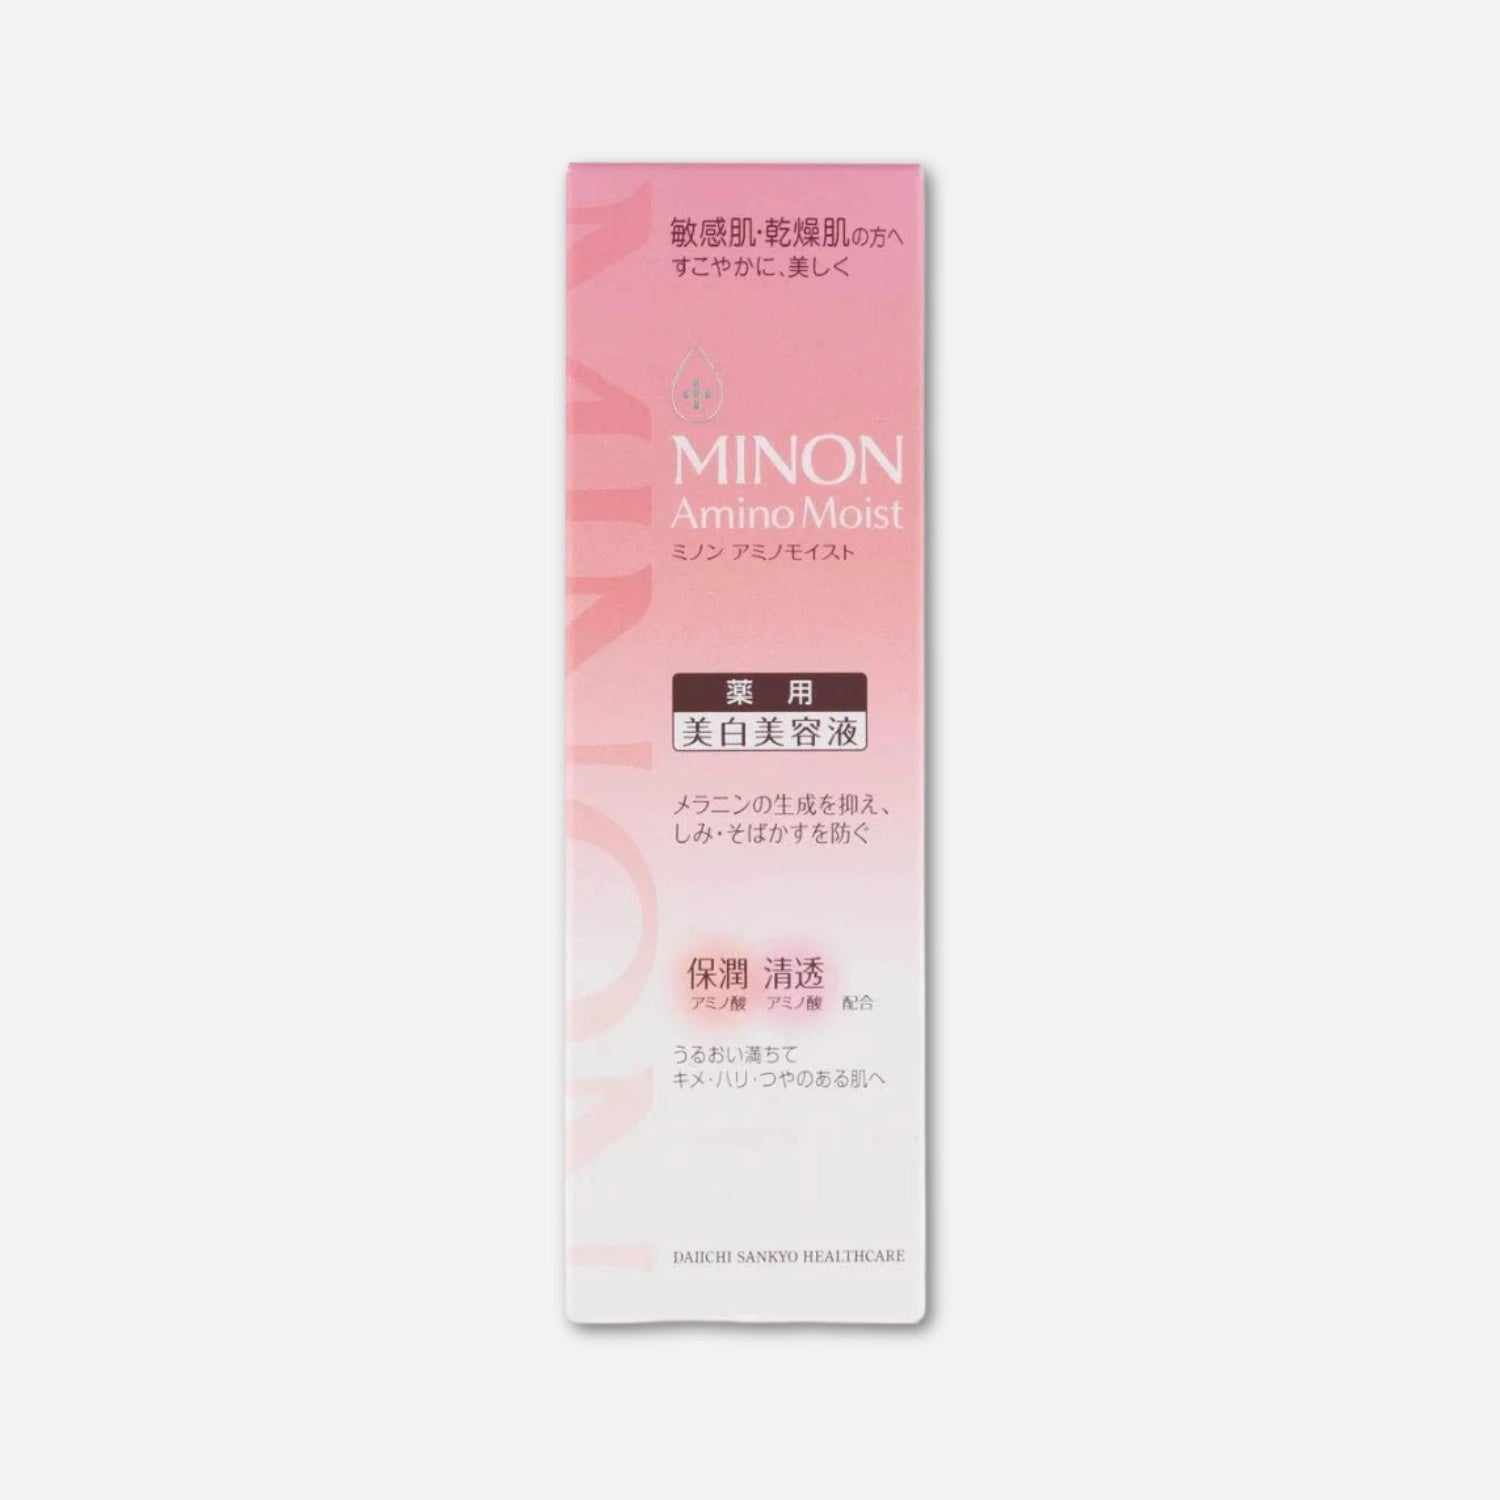 Minon Amino Moist Mild Whitening Serum 30g